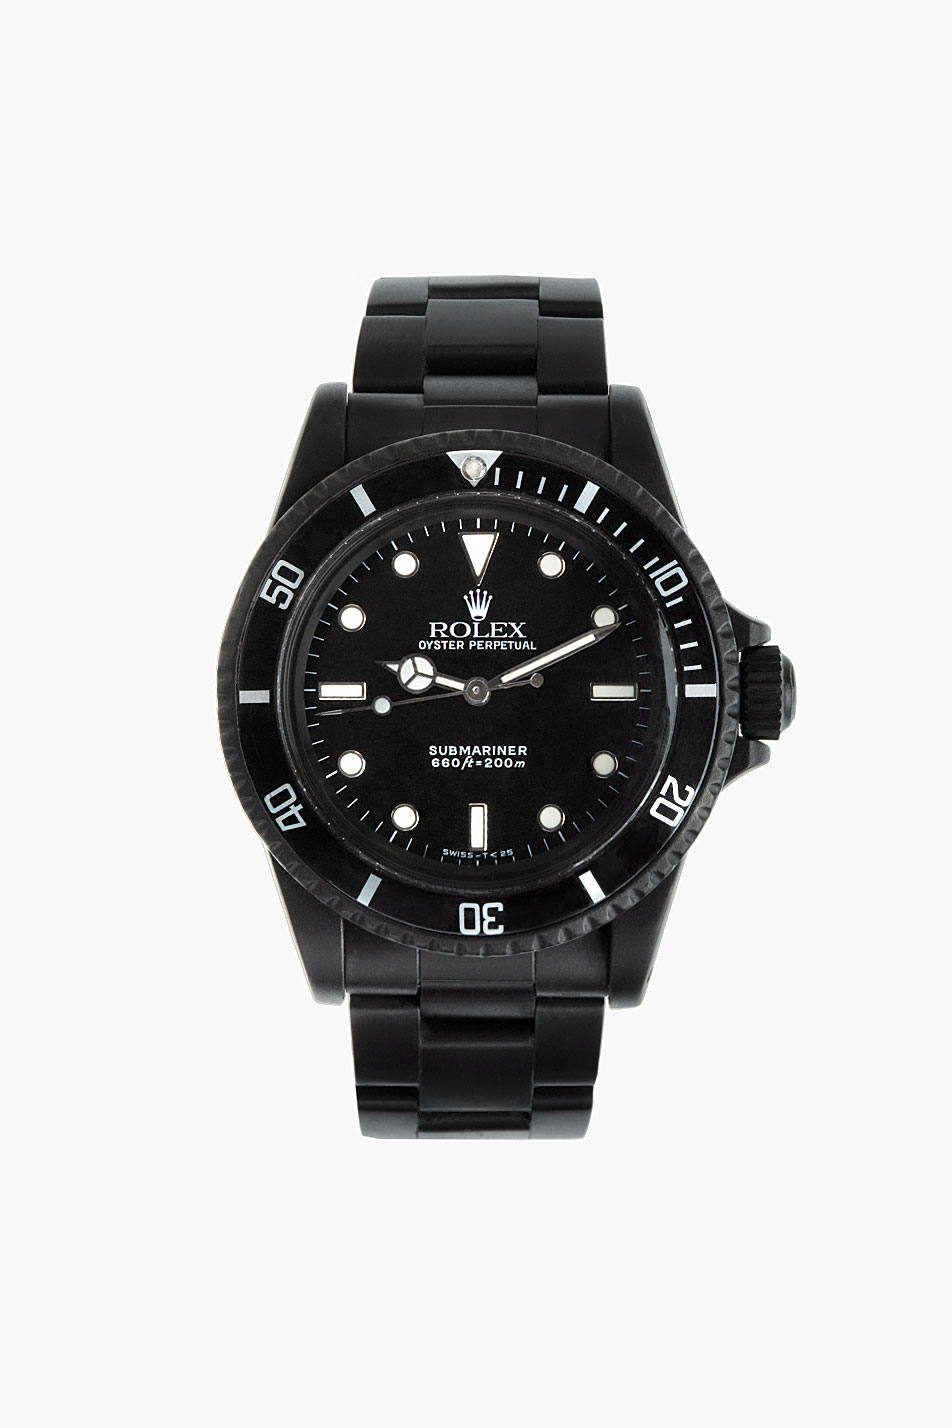 Refurbished Black Rolex Watch Limited Edition 6